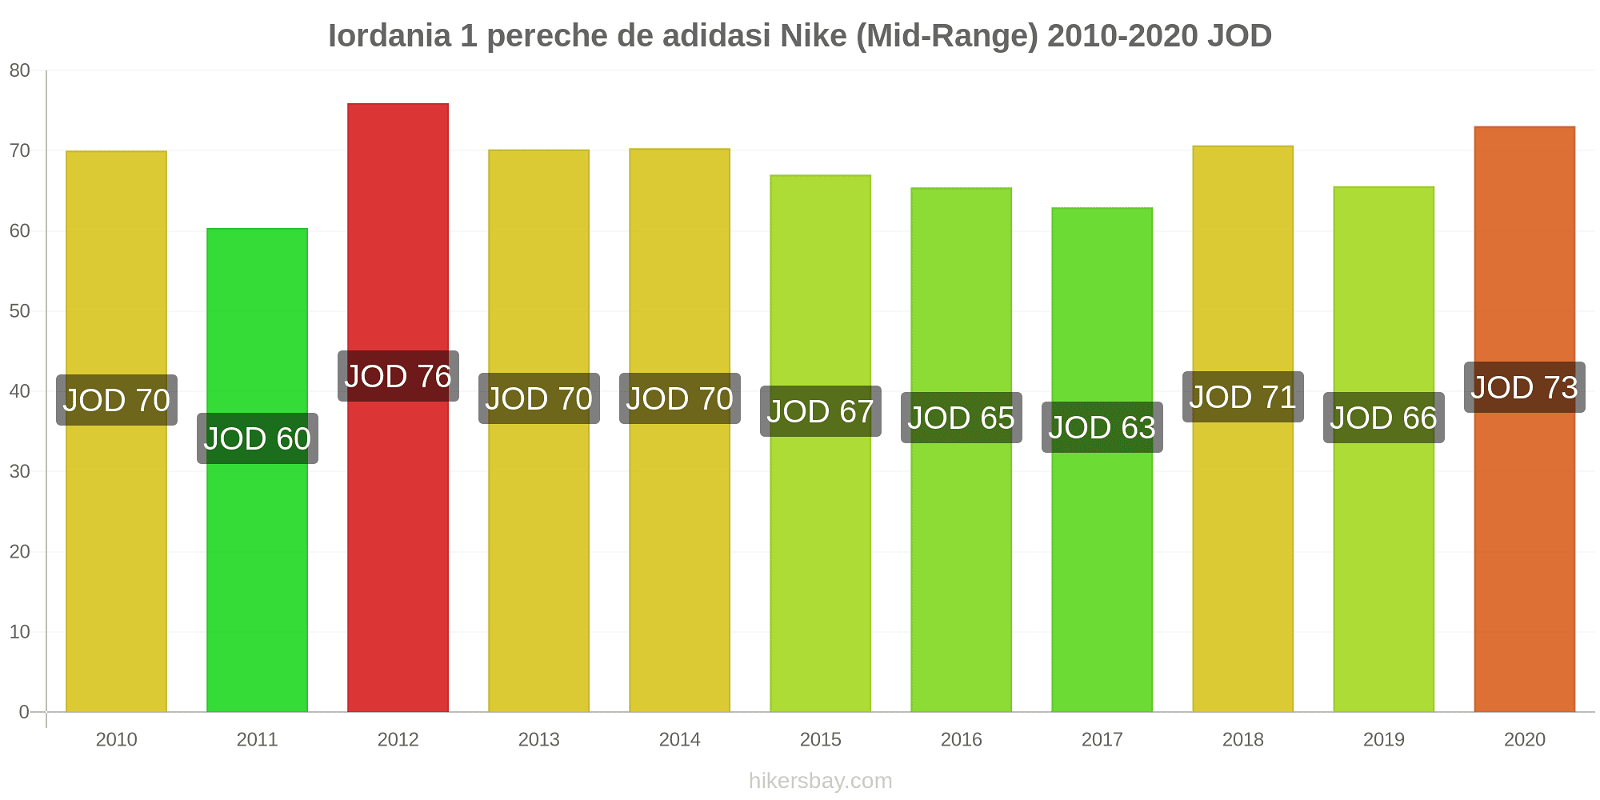 Iordania modificări de preț 1 pereche de adidasi Nike (Mid-Range) hikersbay.com